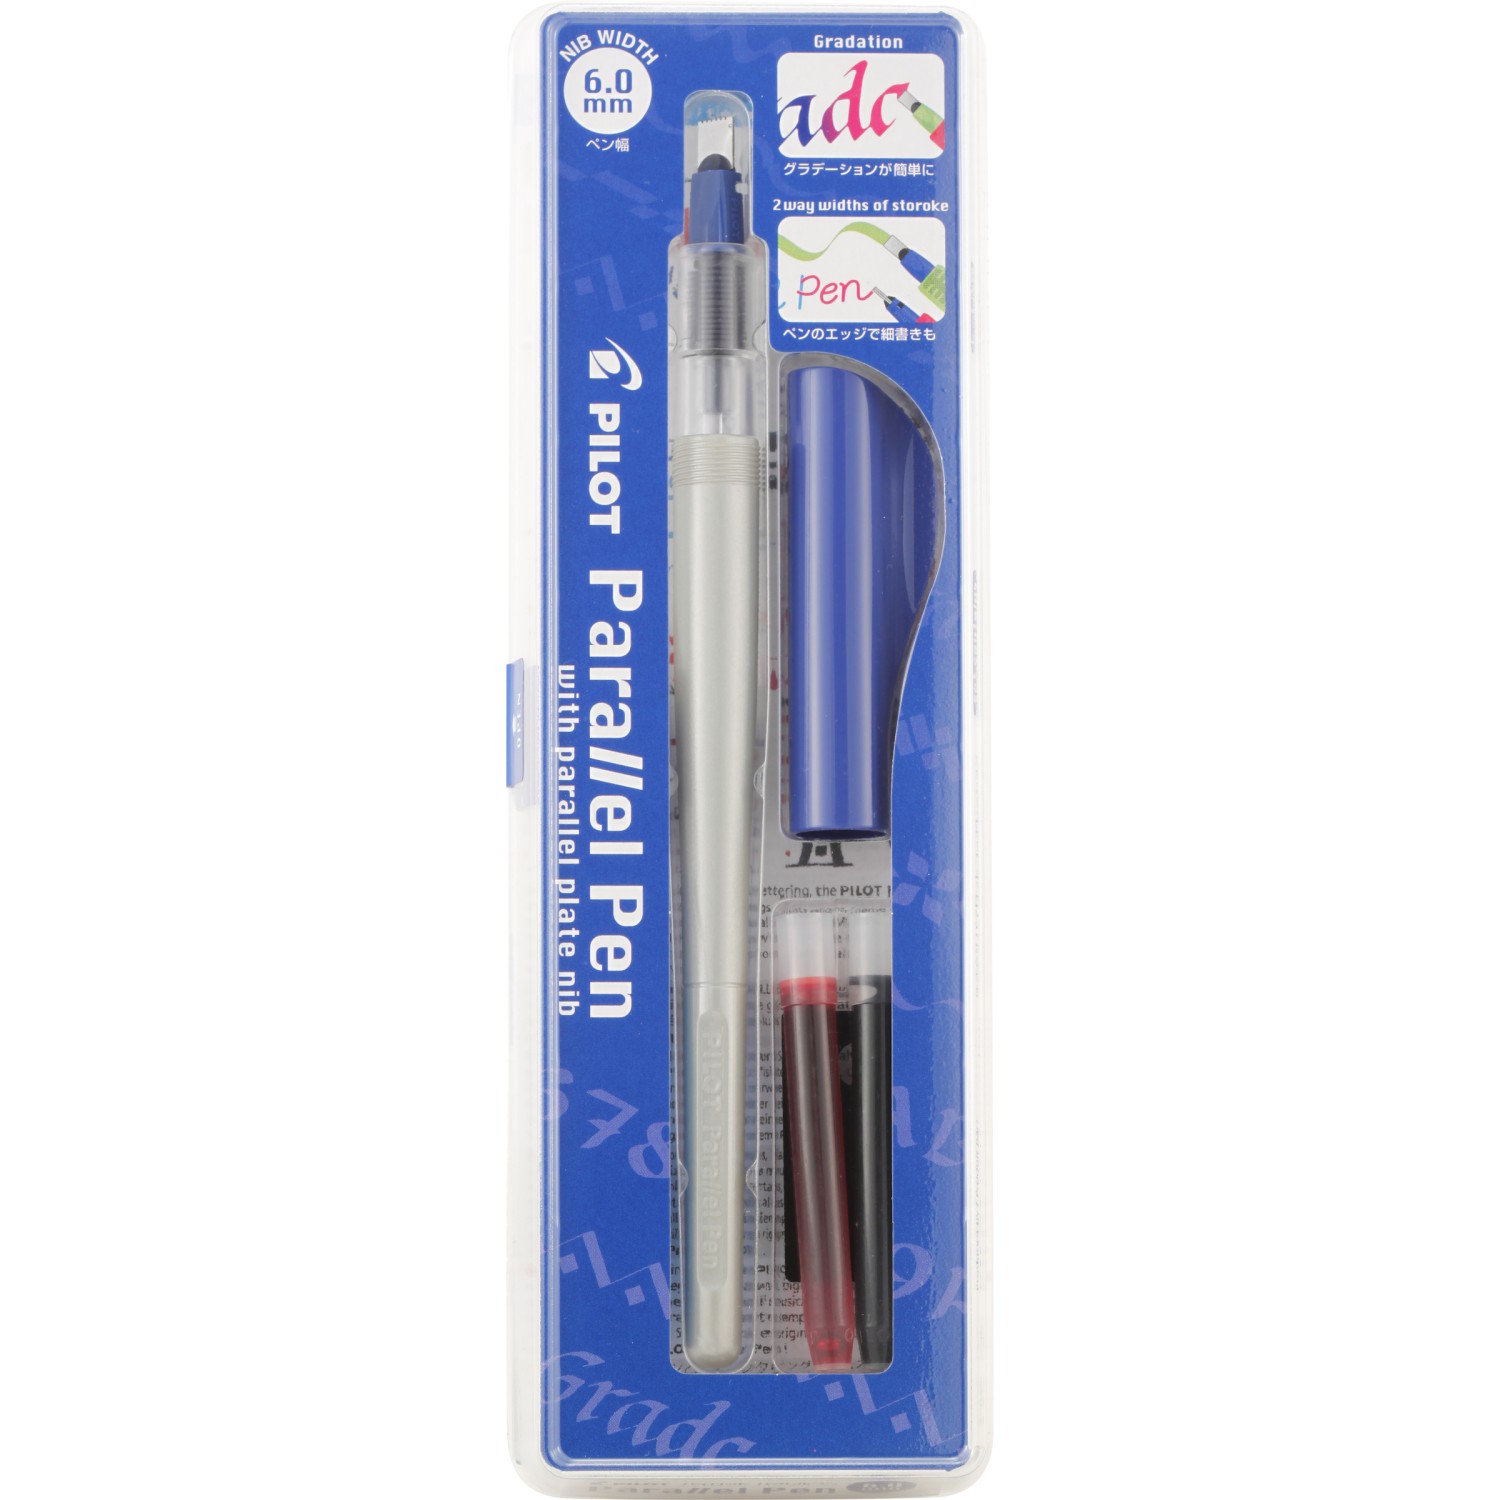 Pilot FP360-SET Parallel Pen Set, 6mm nib